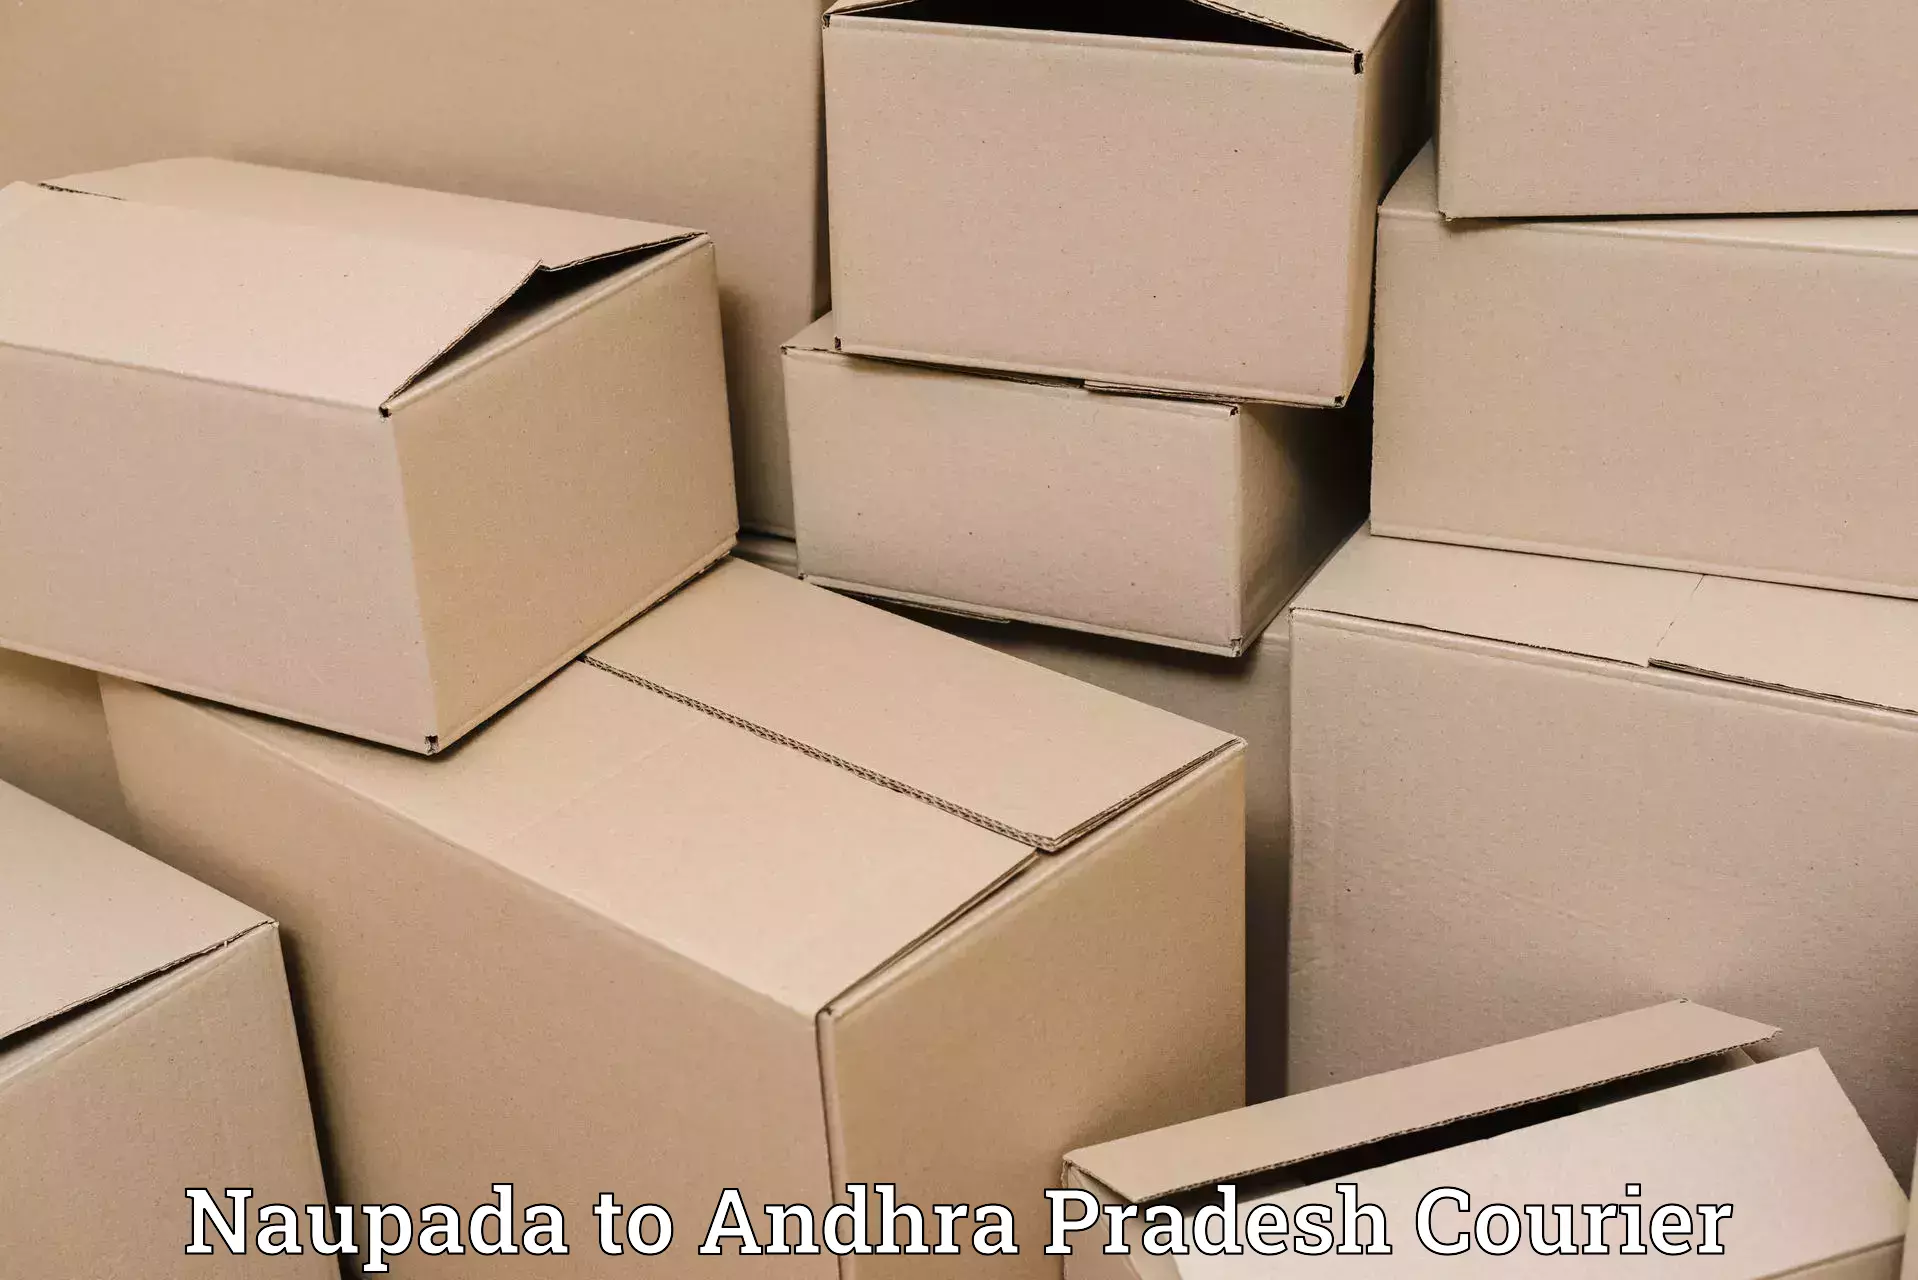 Professional courier handling Naupada to Bhattiprolu